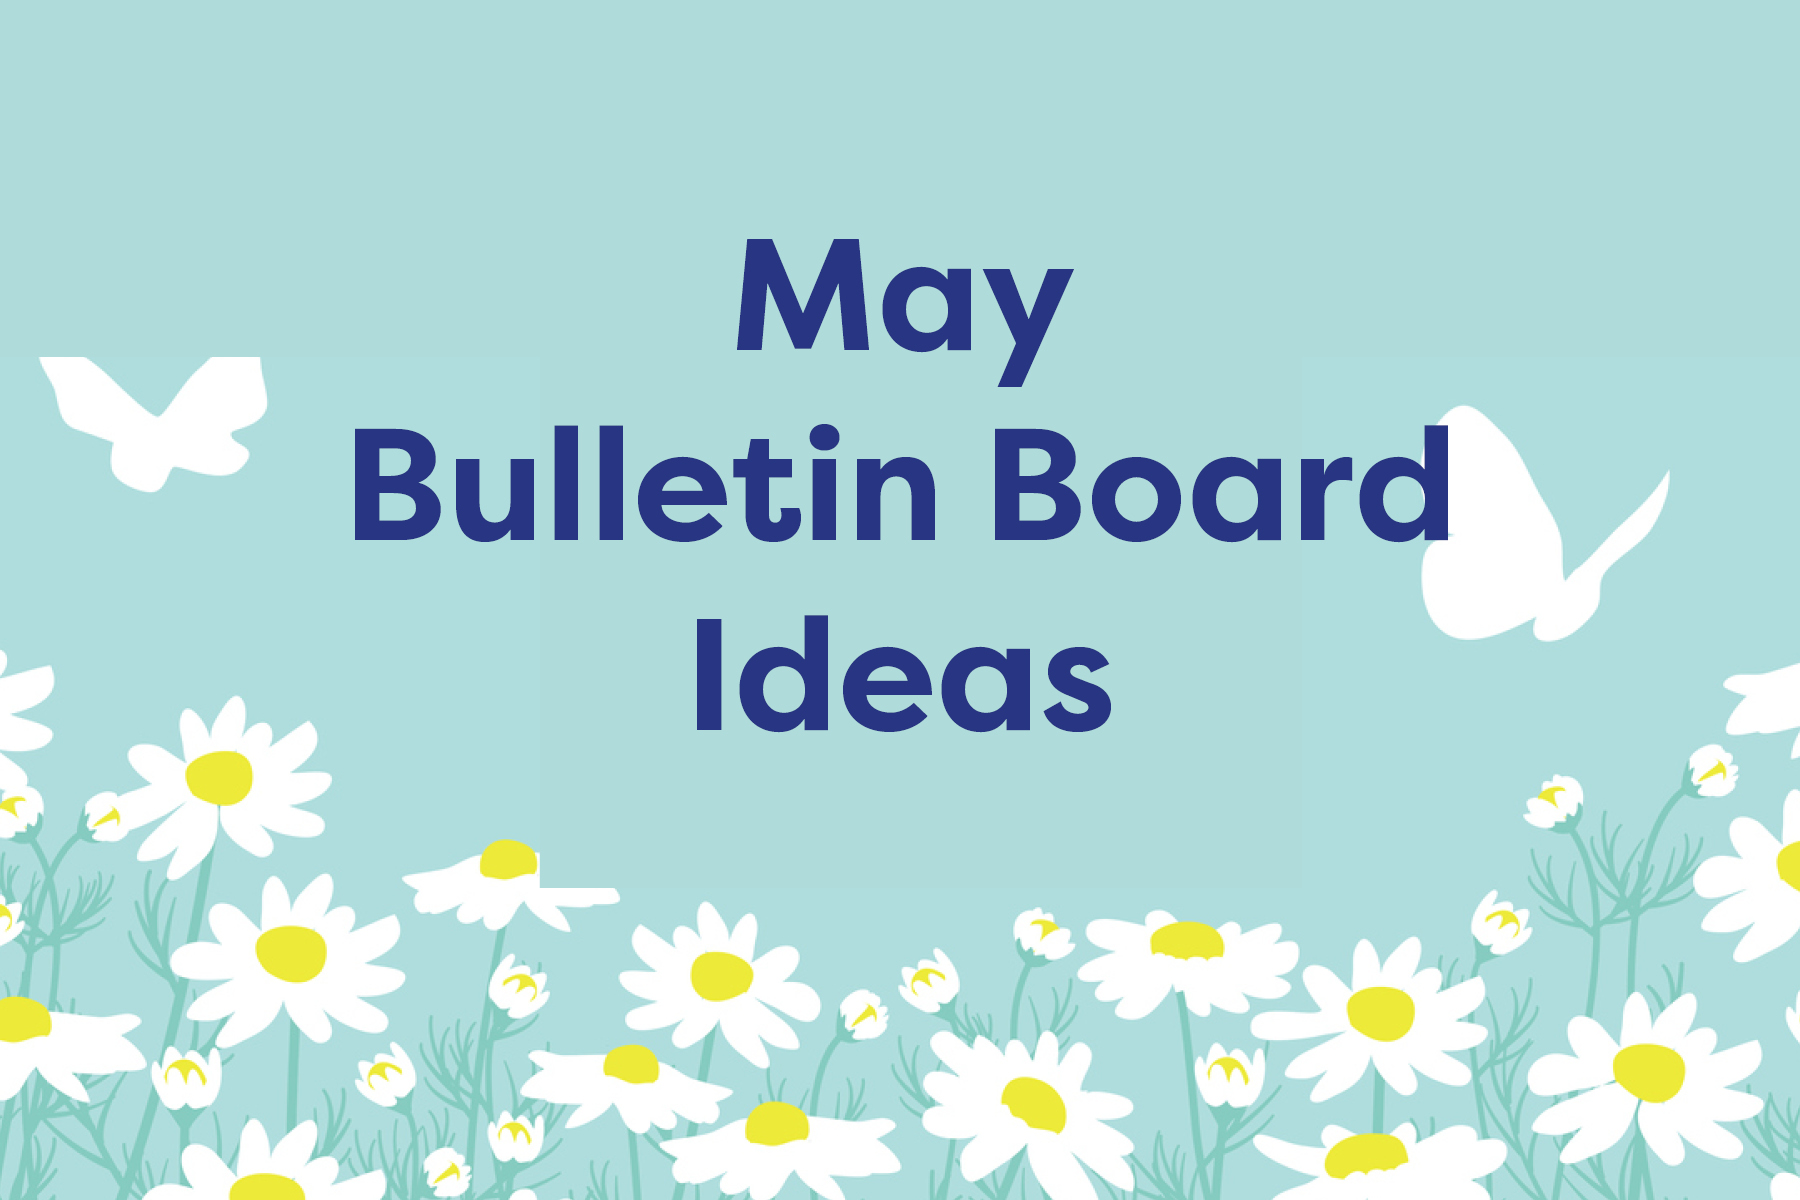 May bulletin board ideas